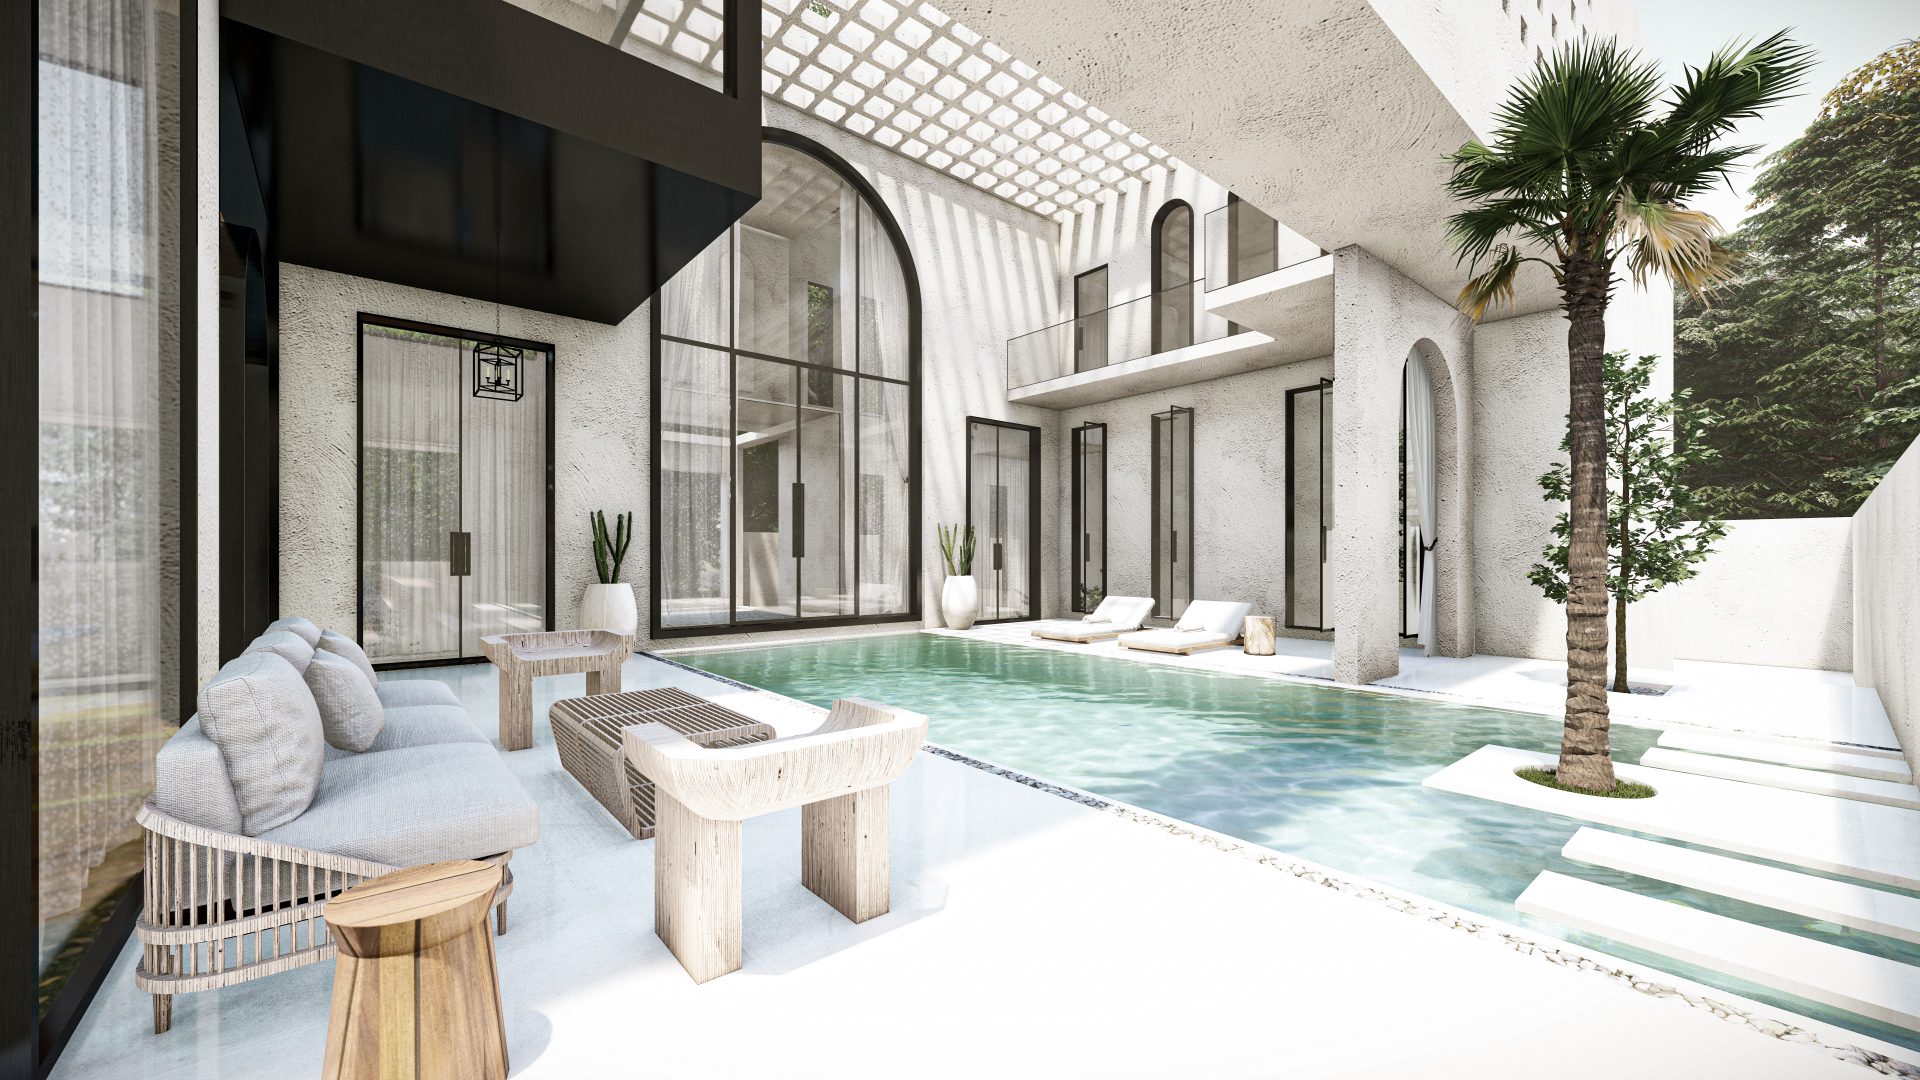 Award-winning Design Services in Bahrain - Luxury Lifestyle Awards